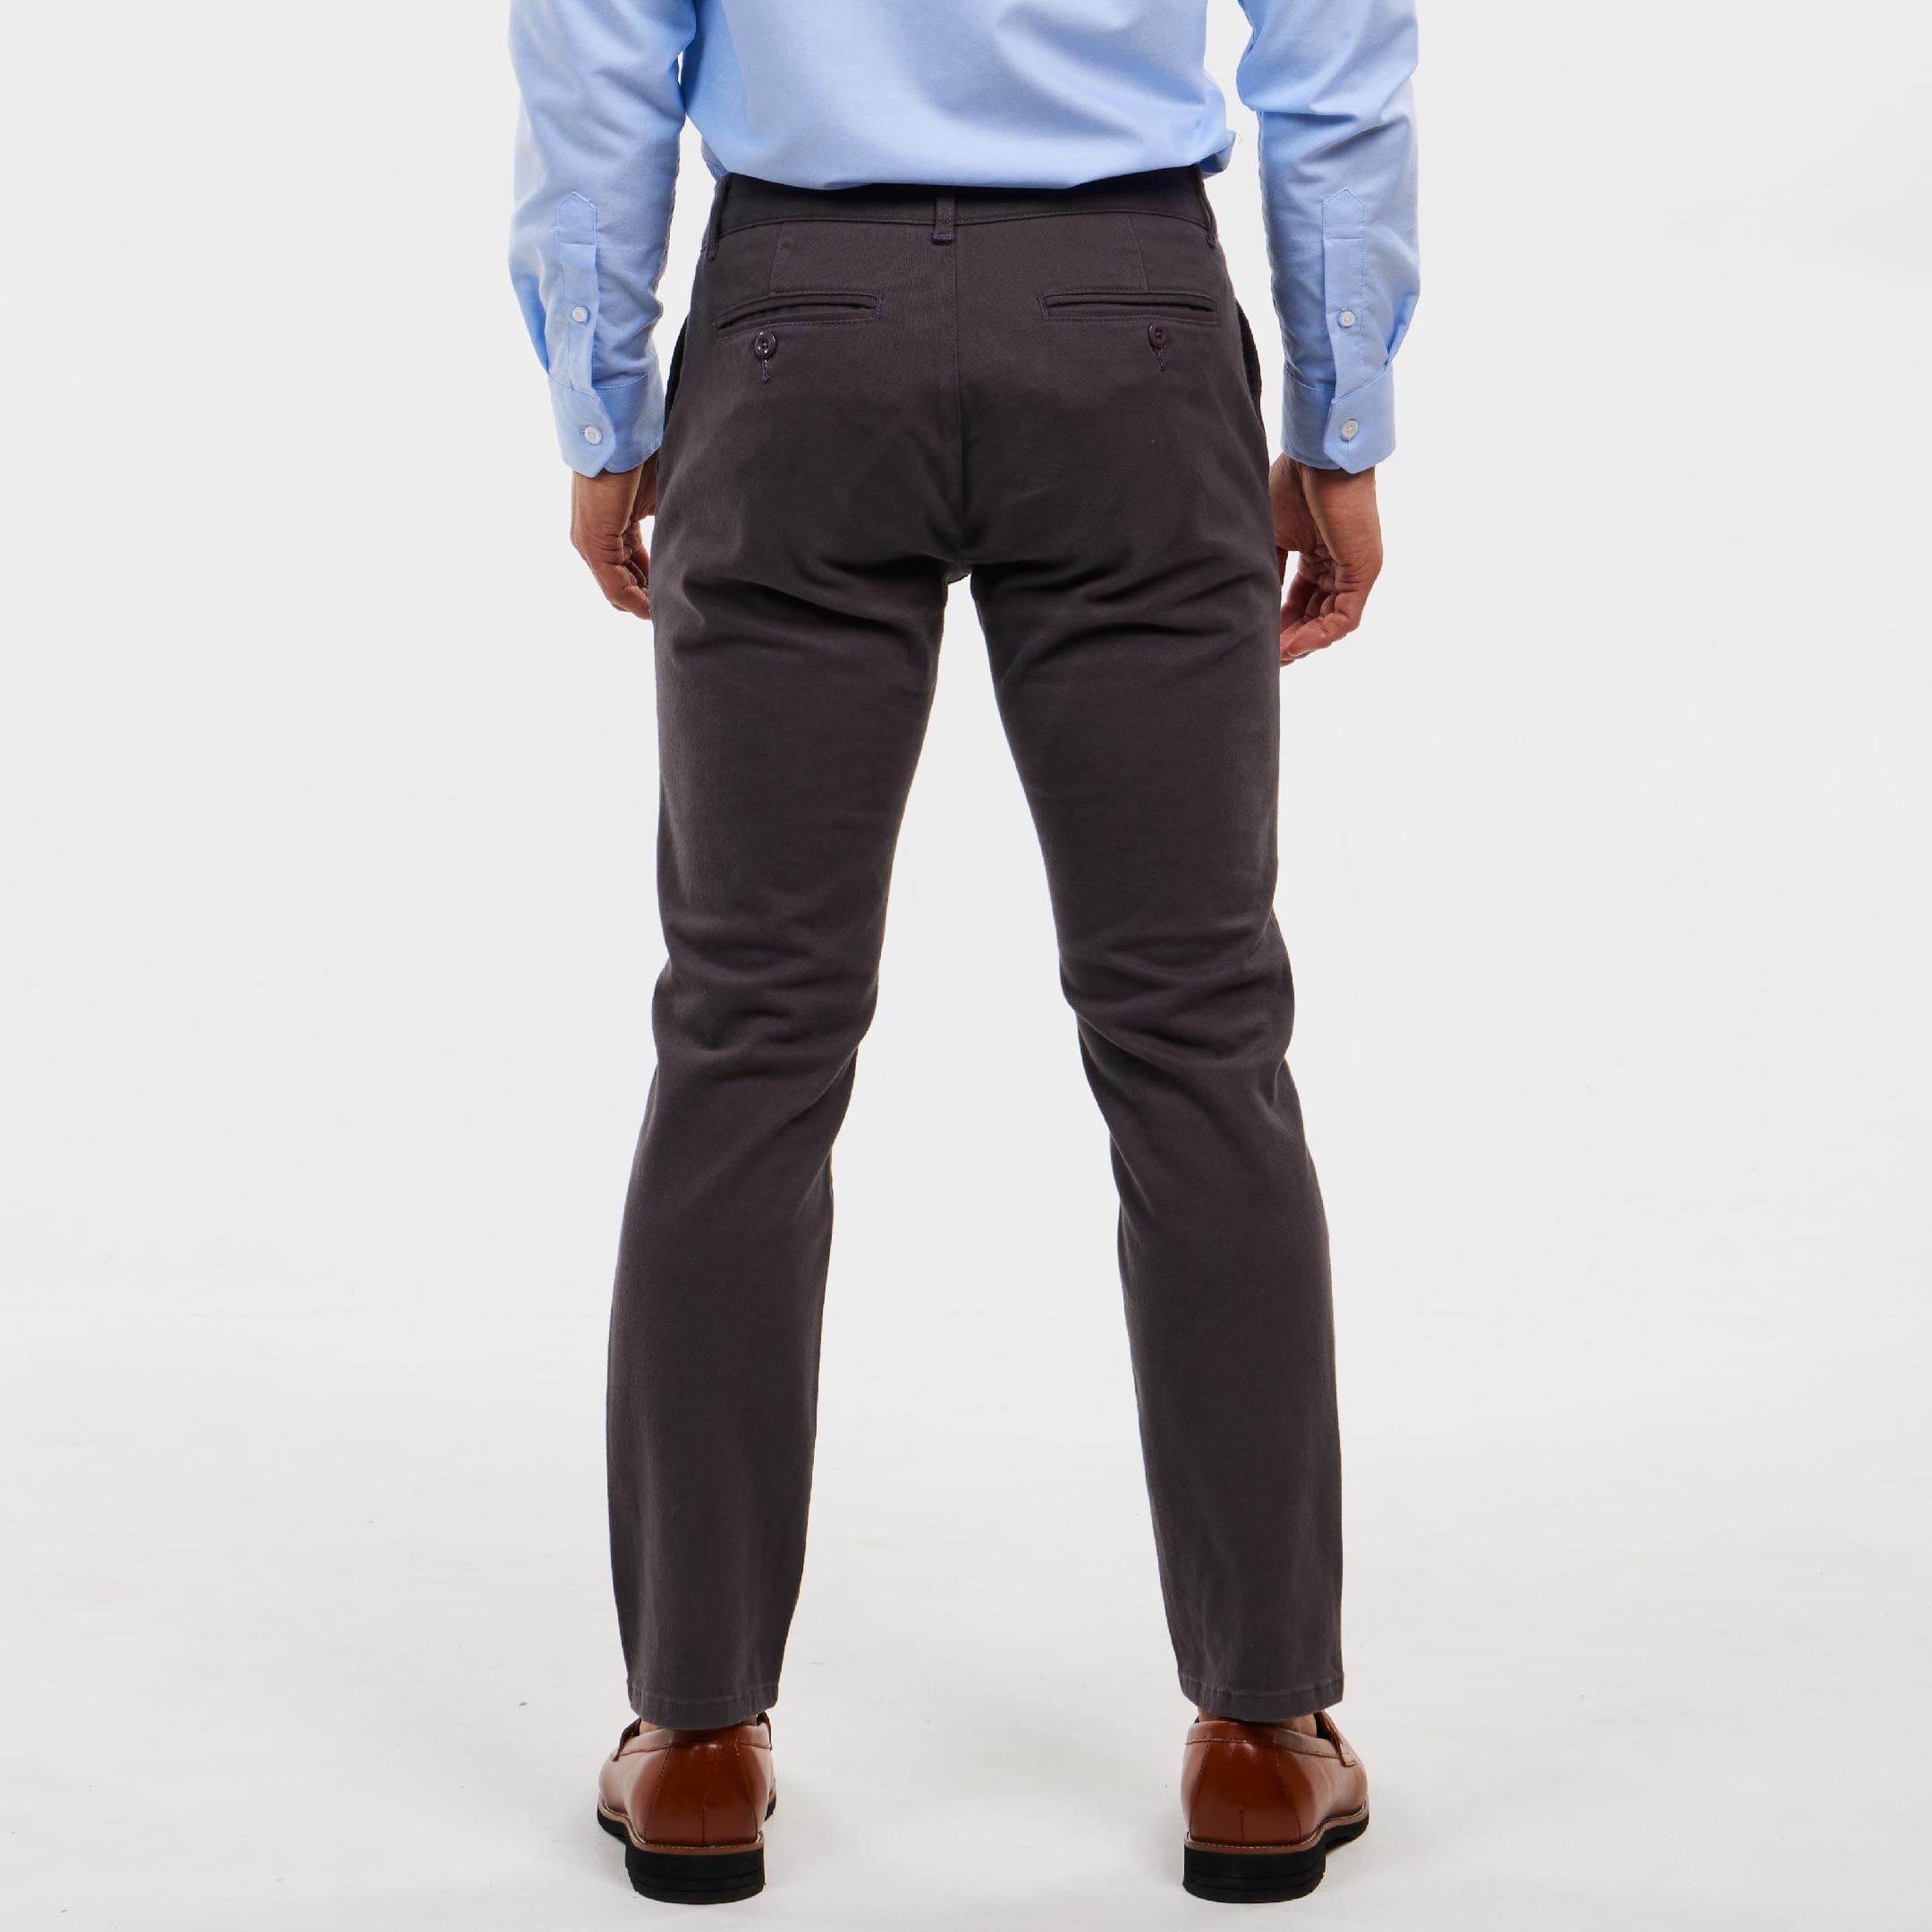 Suit Pant Length: How Long Should Trousers Be?